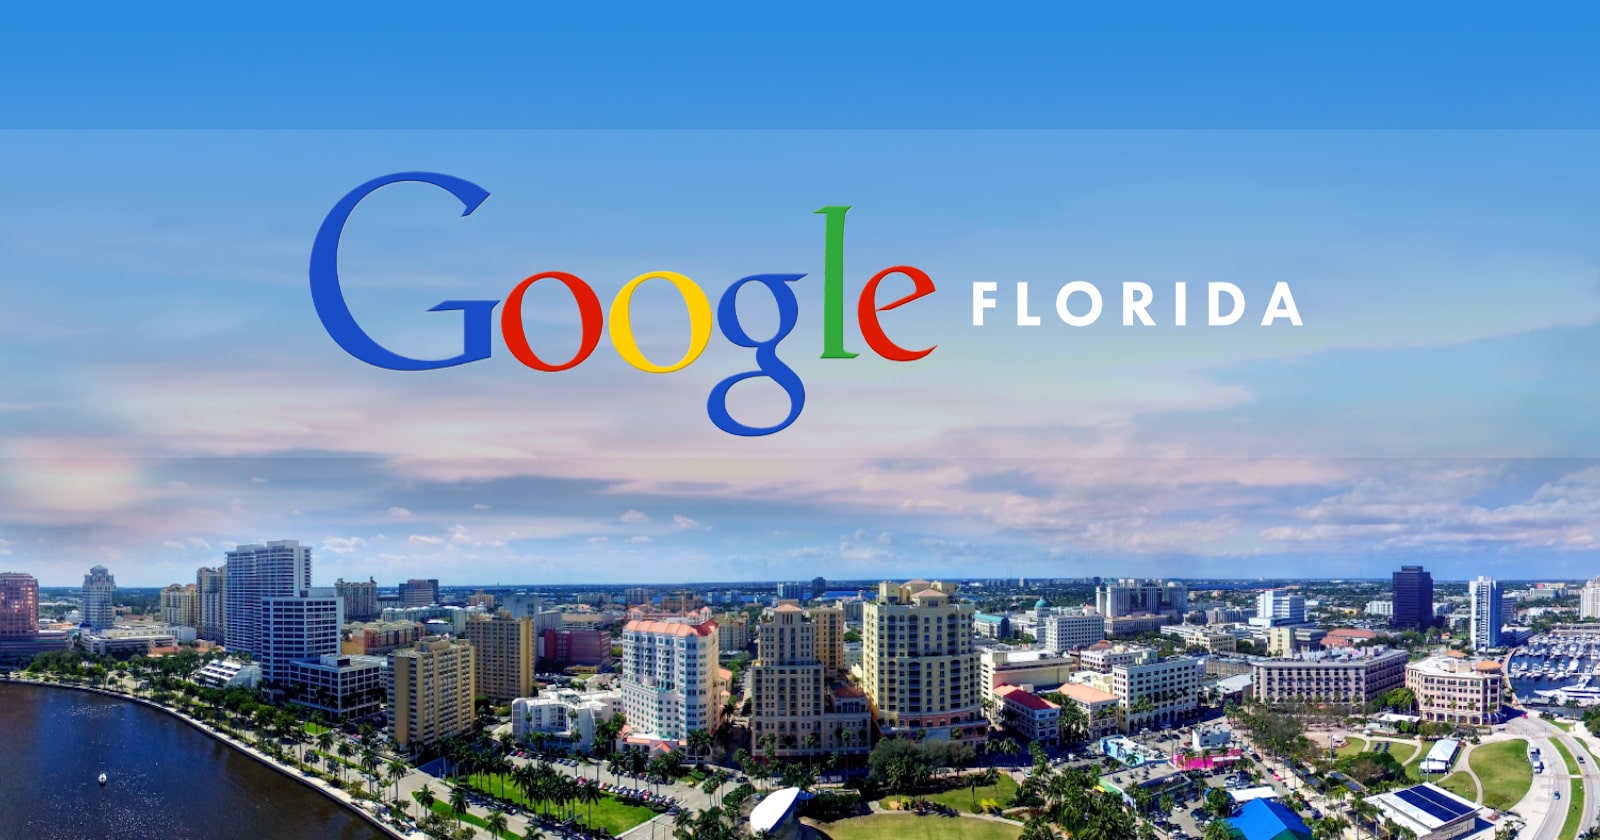 Google Florida: The First Major Algorithm Update